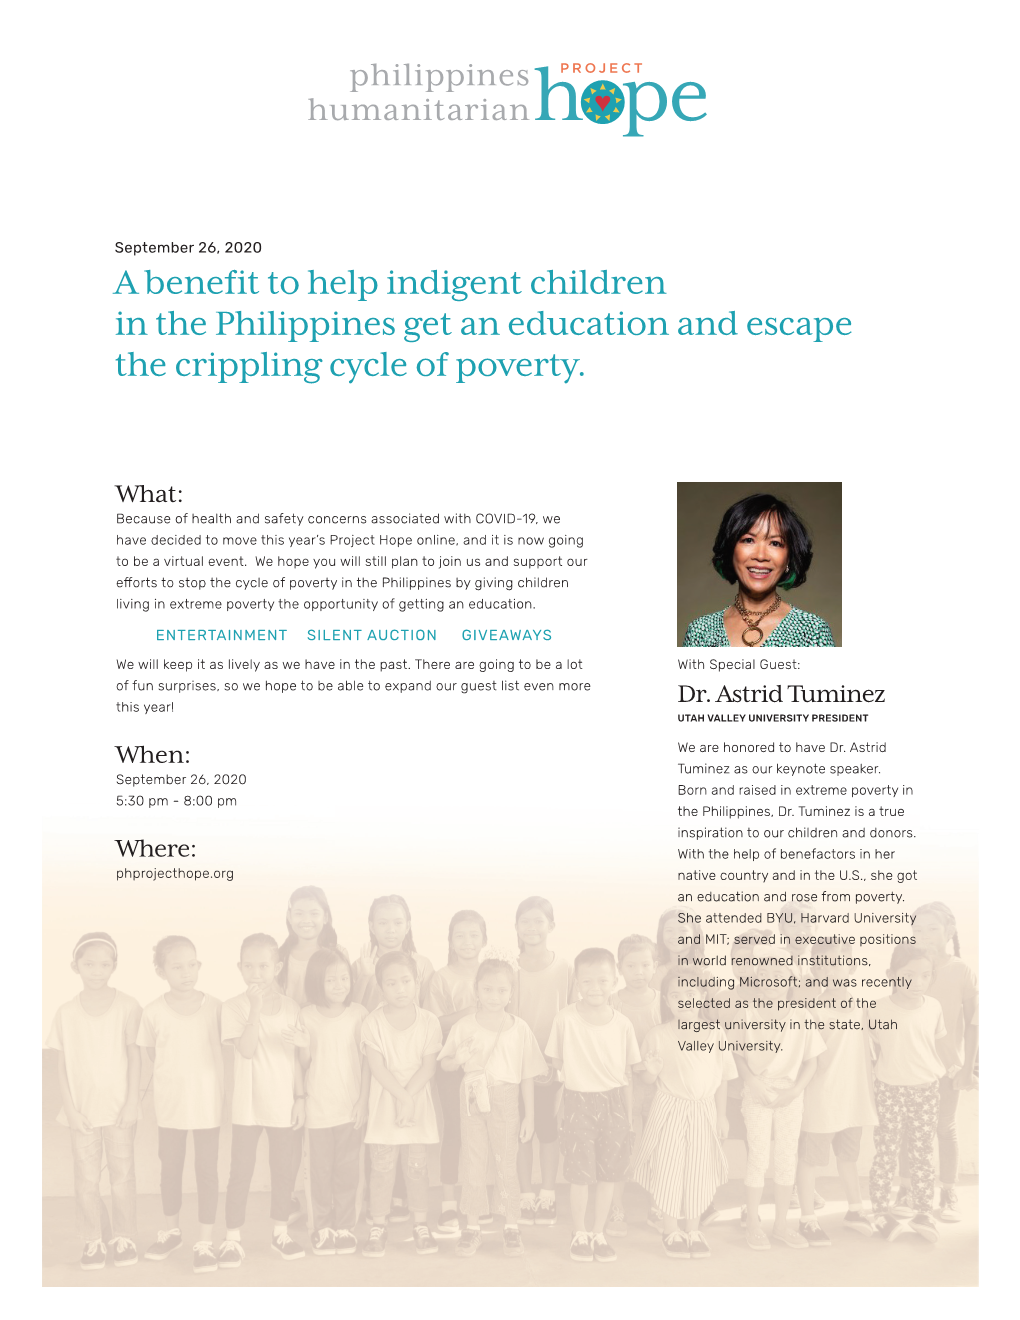 A Benefit to Help Indigent Children in the Philippines Get An